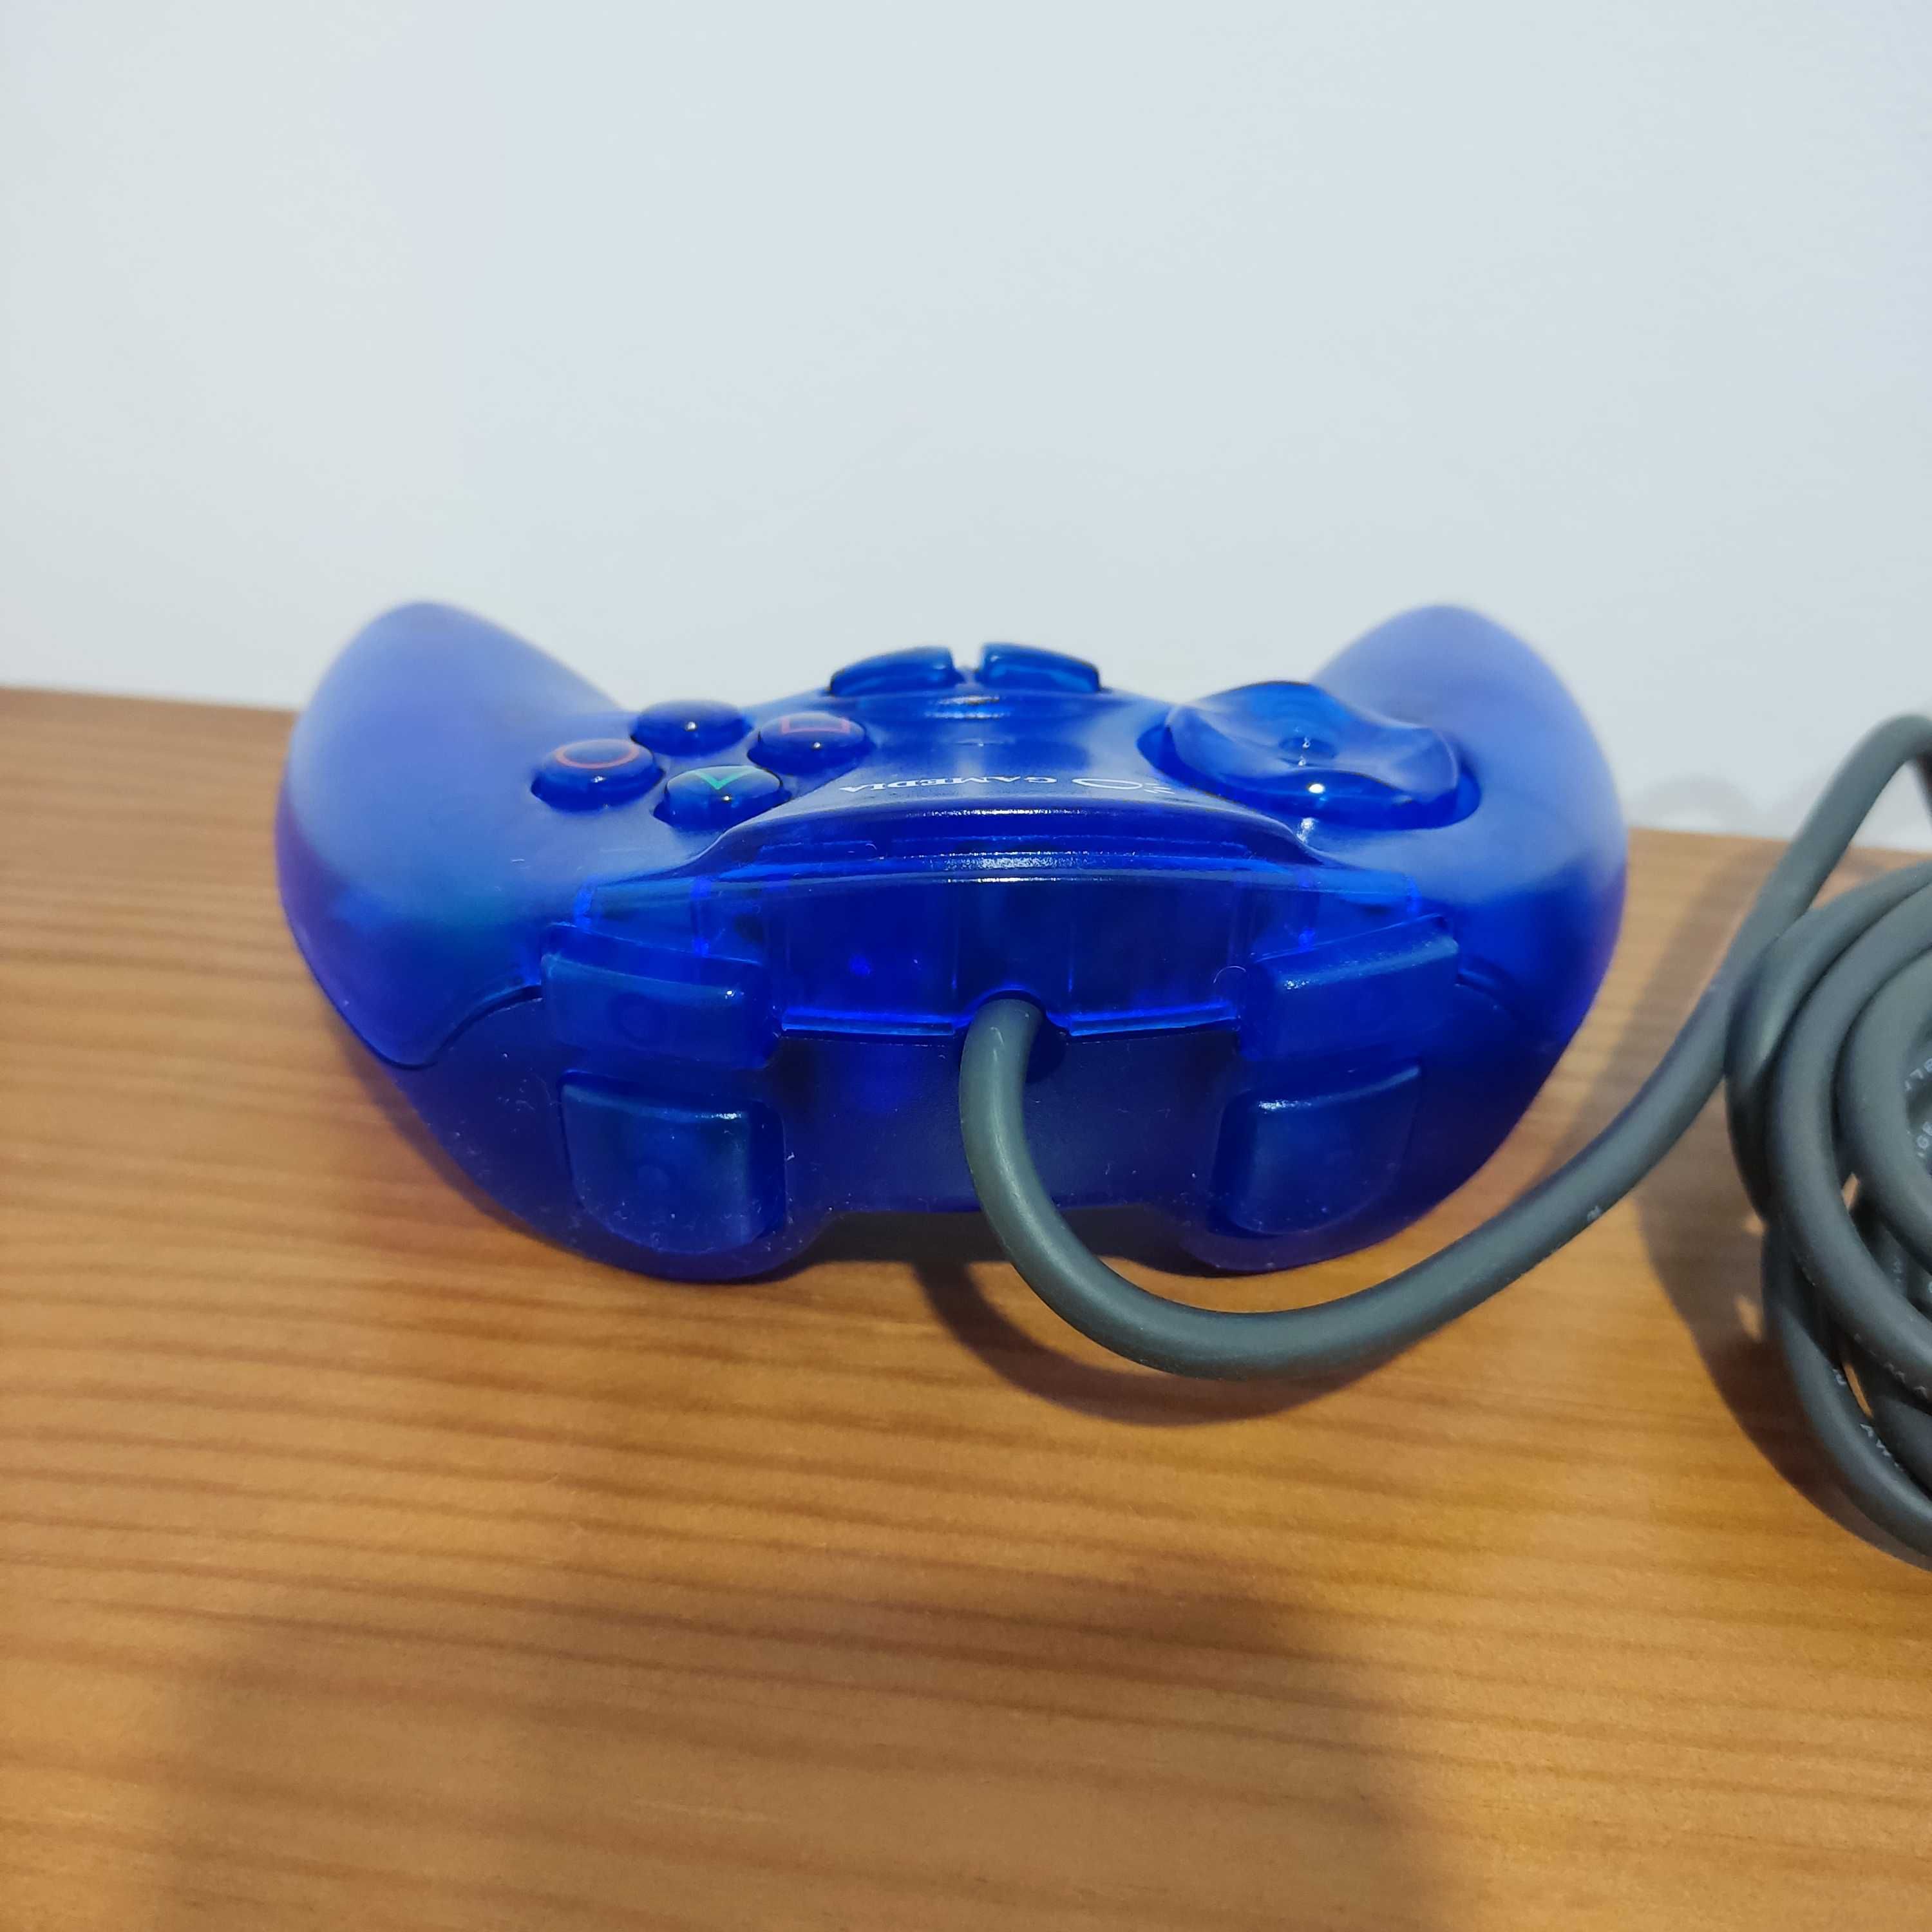 Comando Playstation Standard PSX Joypad Azul Novo em blister